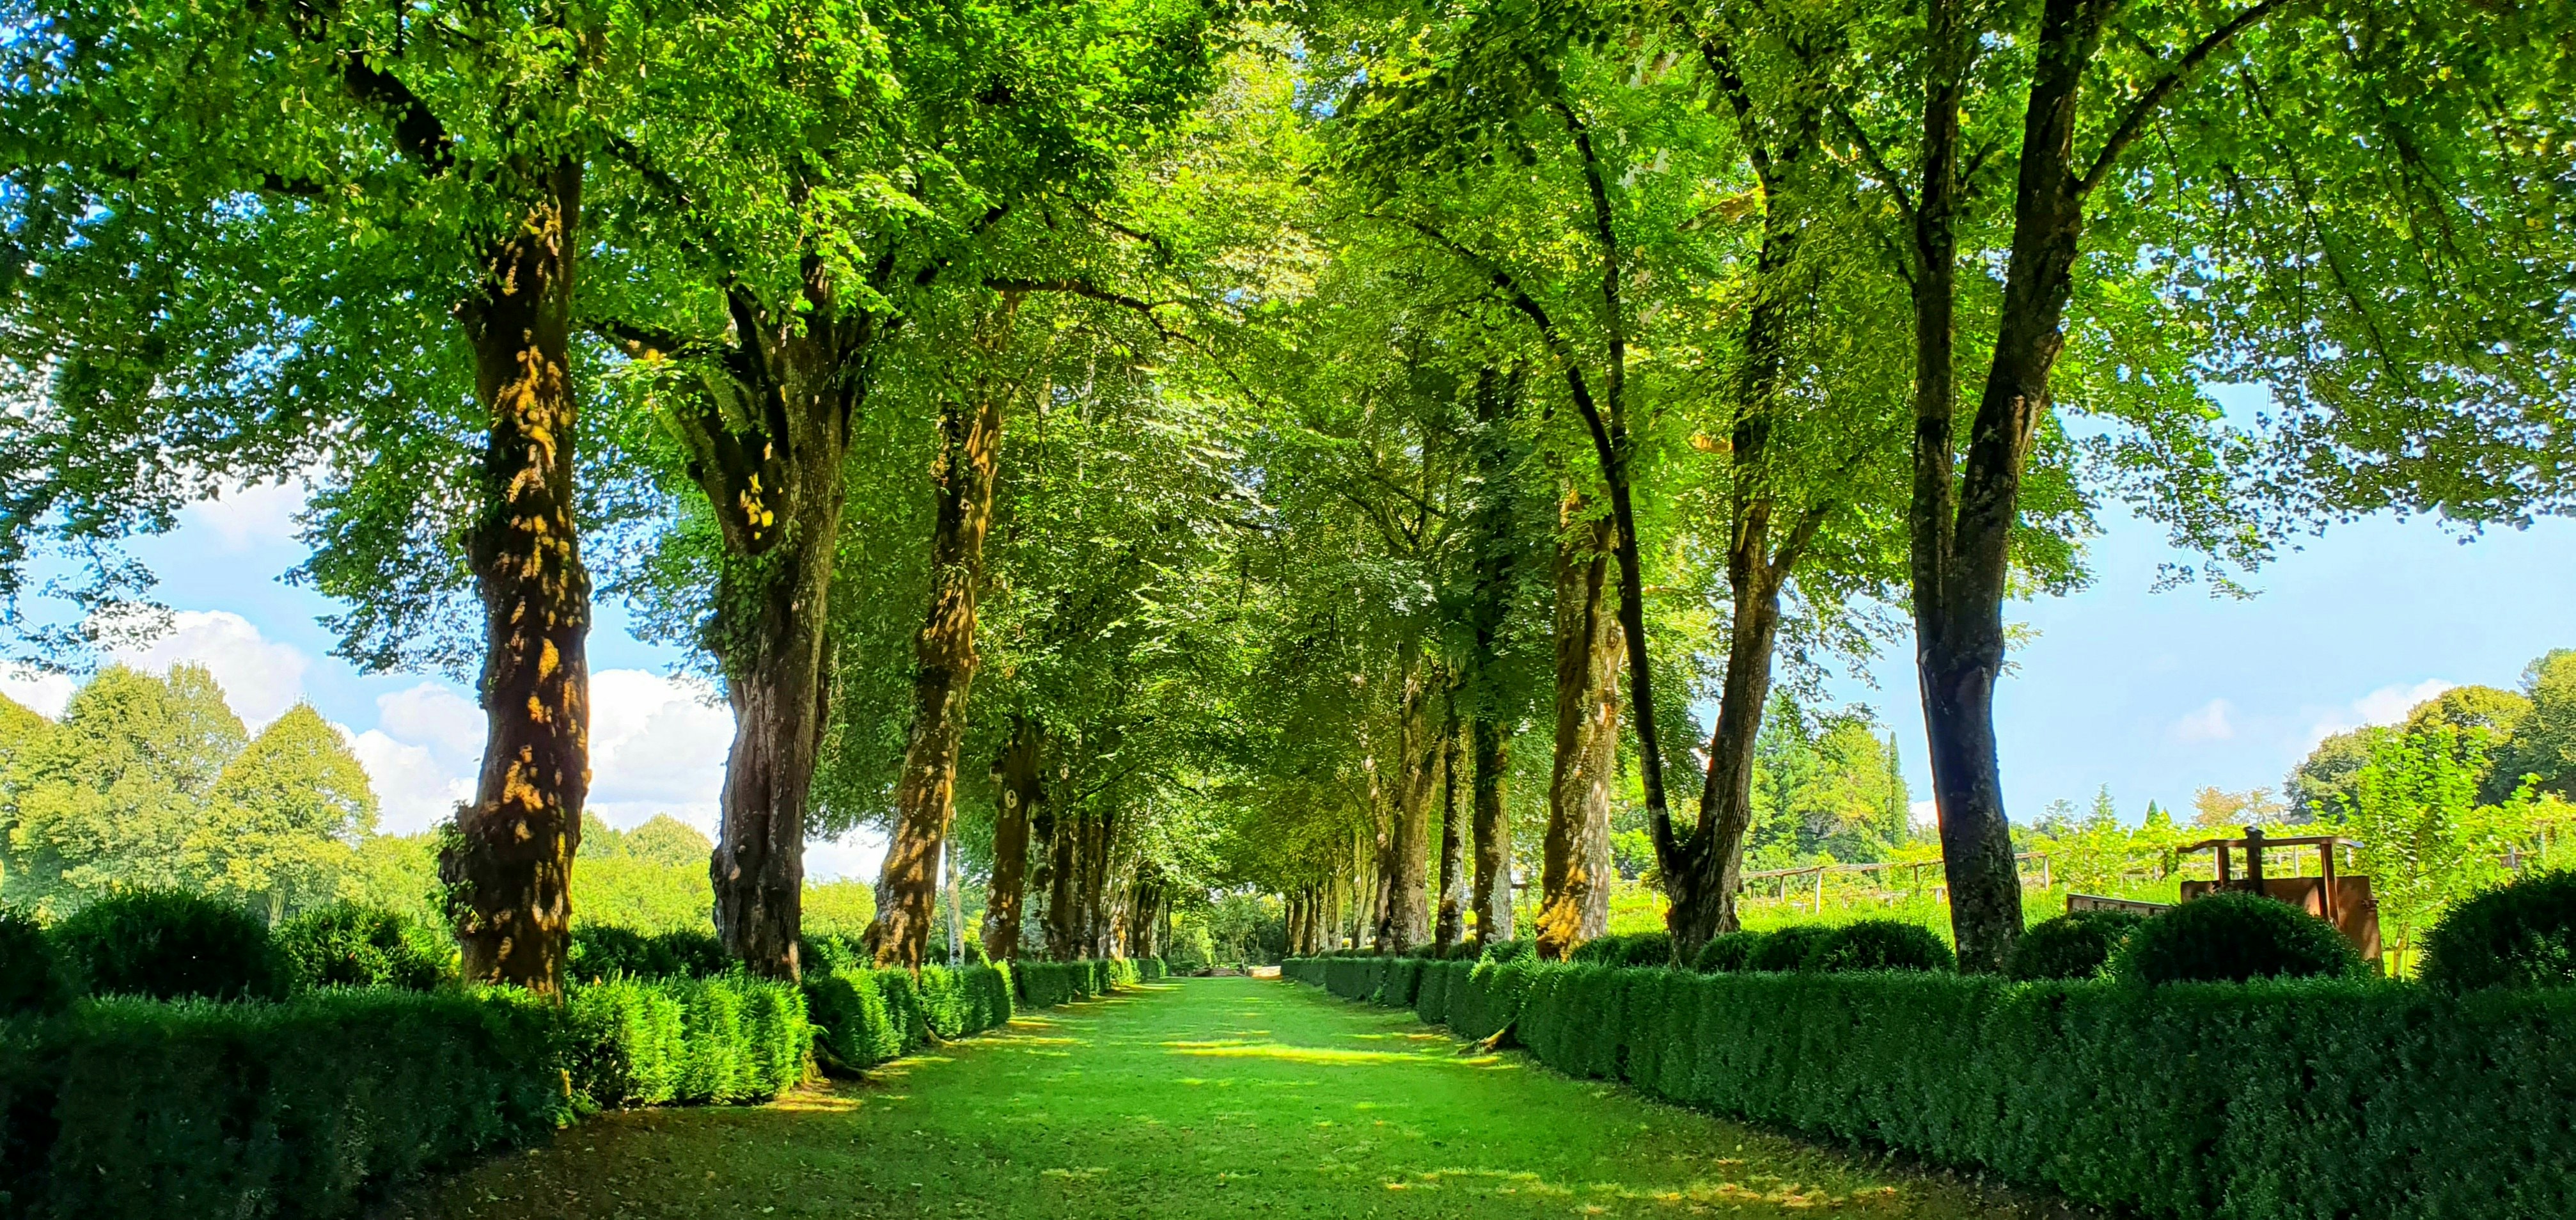 A lovely idyllic walk through trees in the summer in the castle Pazo de Oca in Galicia, Spain